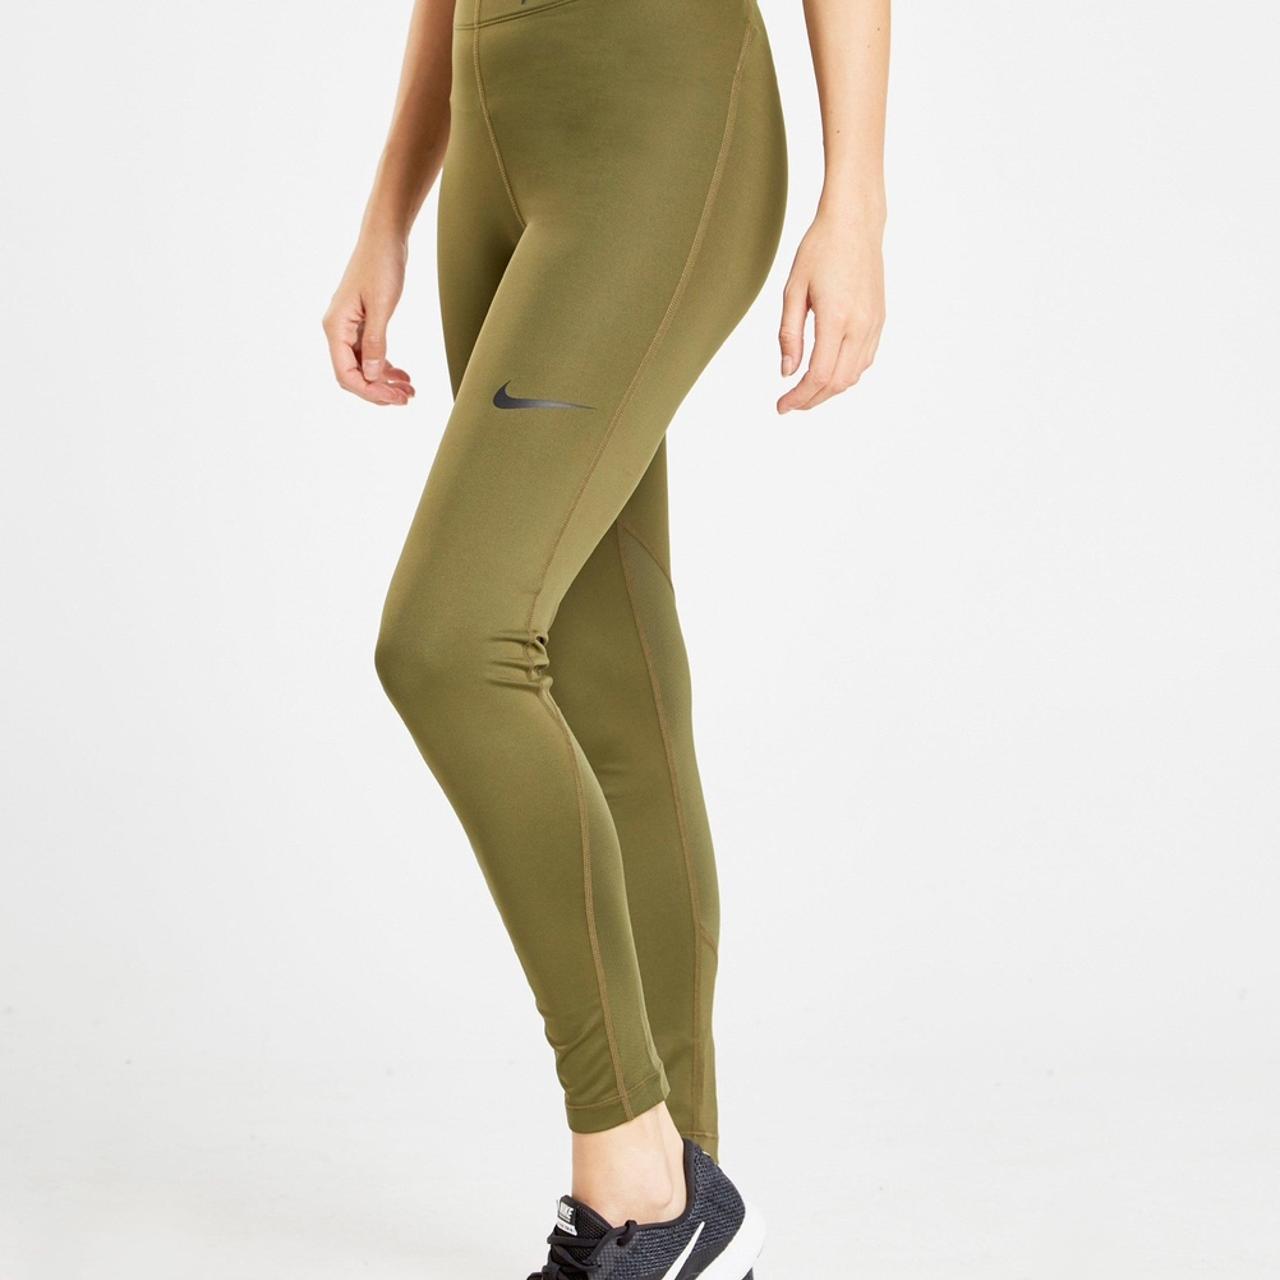 Nike Pro khaki/ green leggings in used but new - Depop